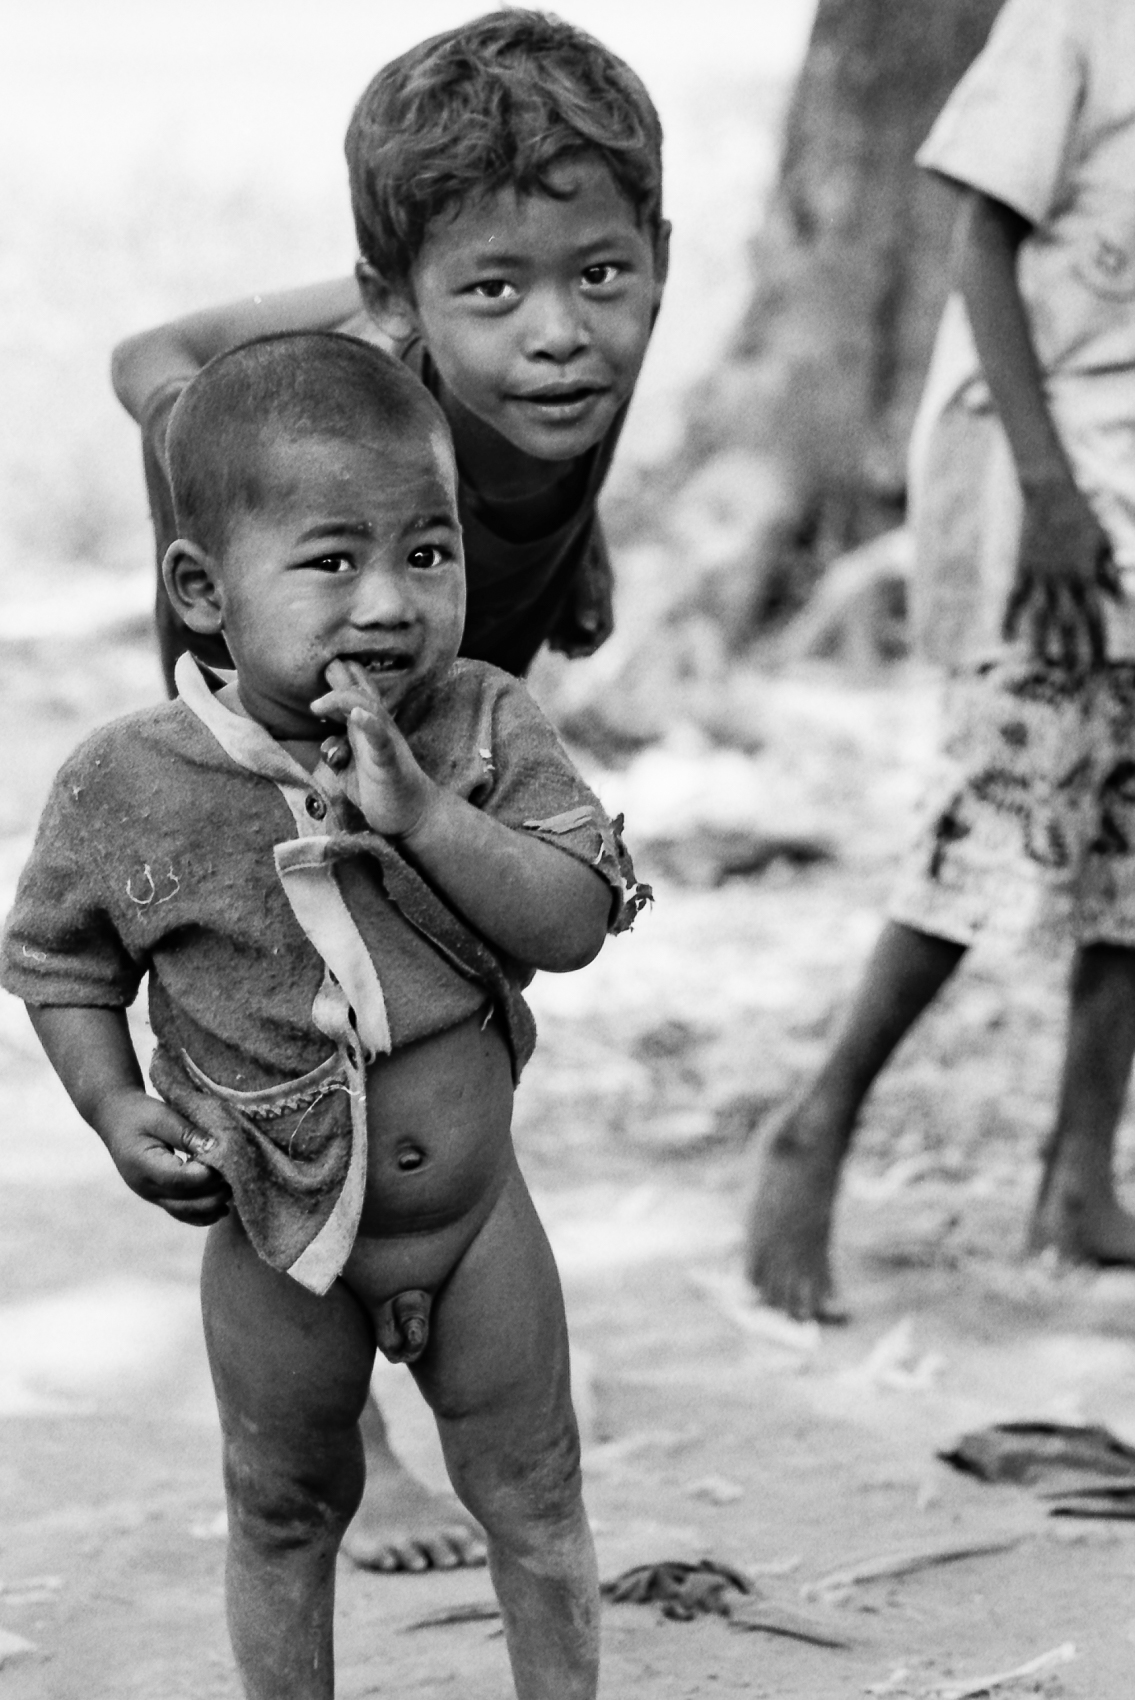 [Pyay, Myanmar] The Boy Walking Around With No Pants On Showed No ...